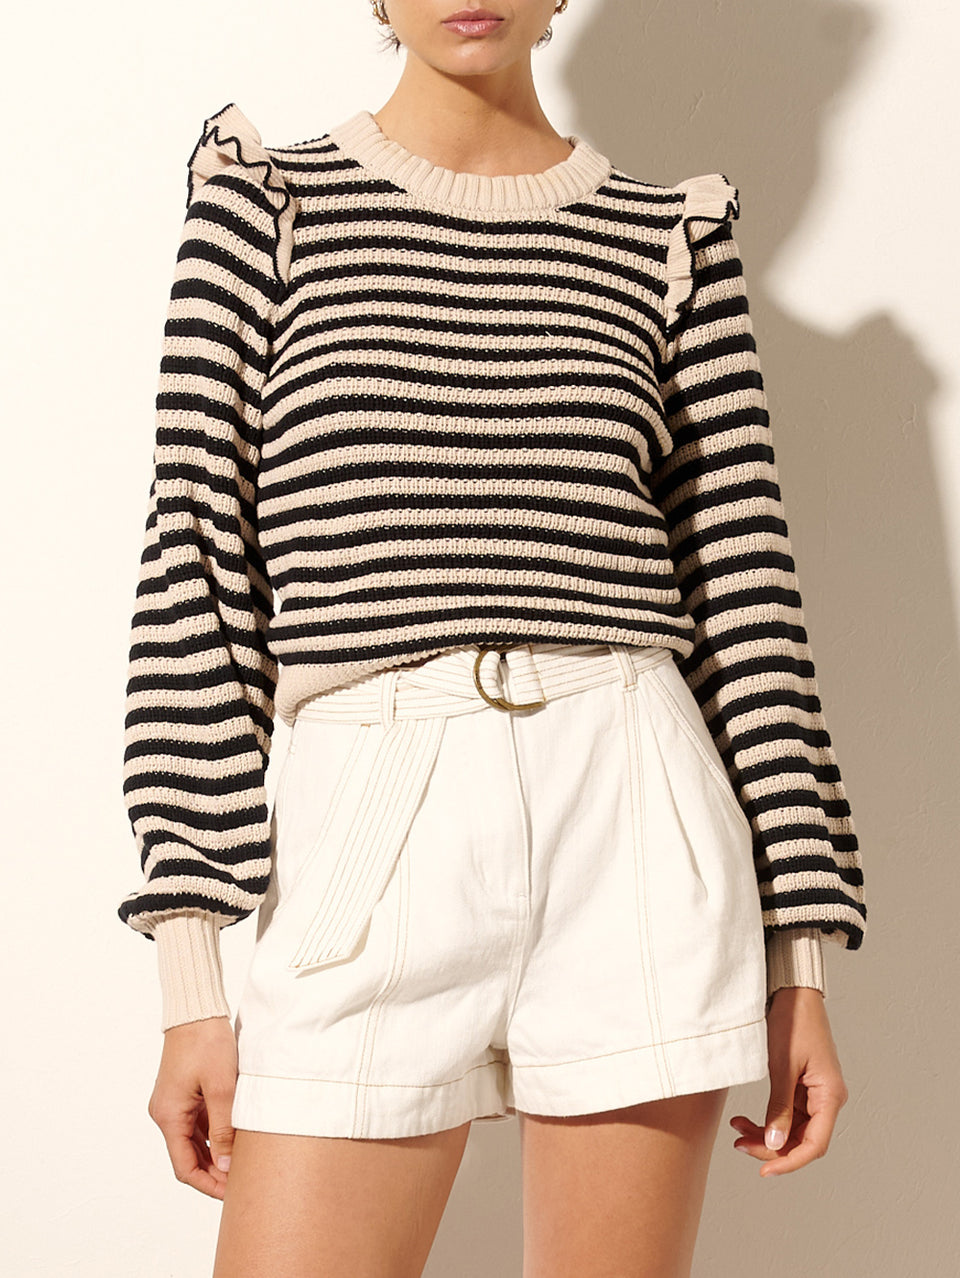 Anita Knit Top KIVARI | Model wears black and white striped knit jumper